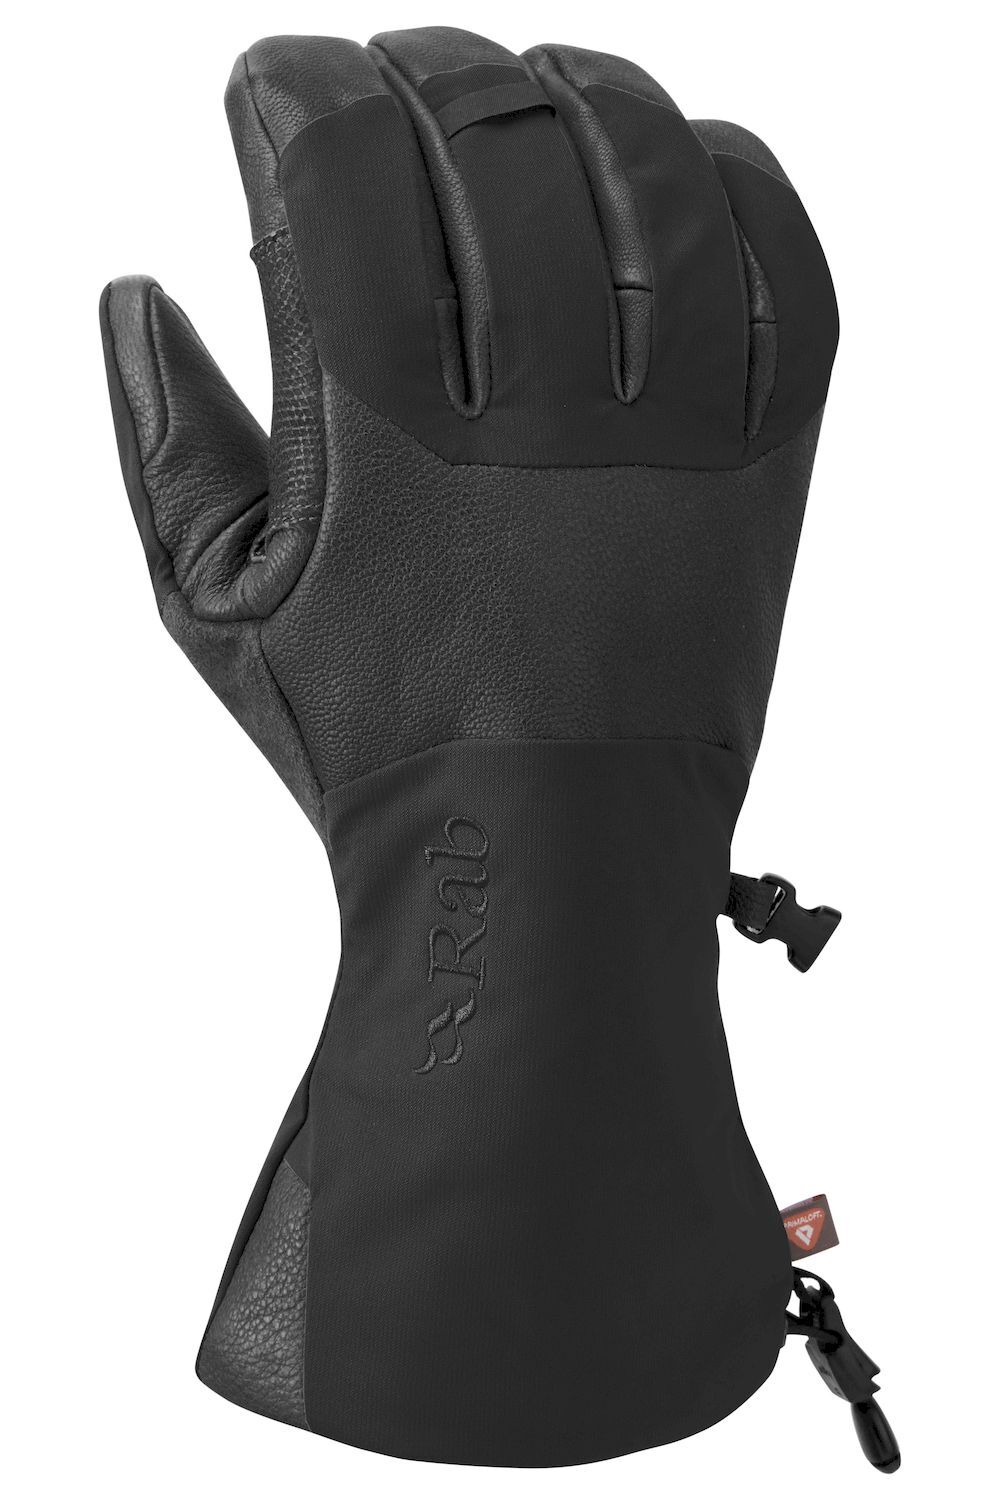 Rab Guide 2 GTX Gloves - Handsker